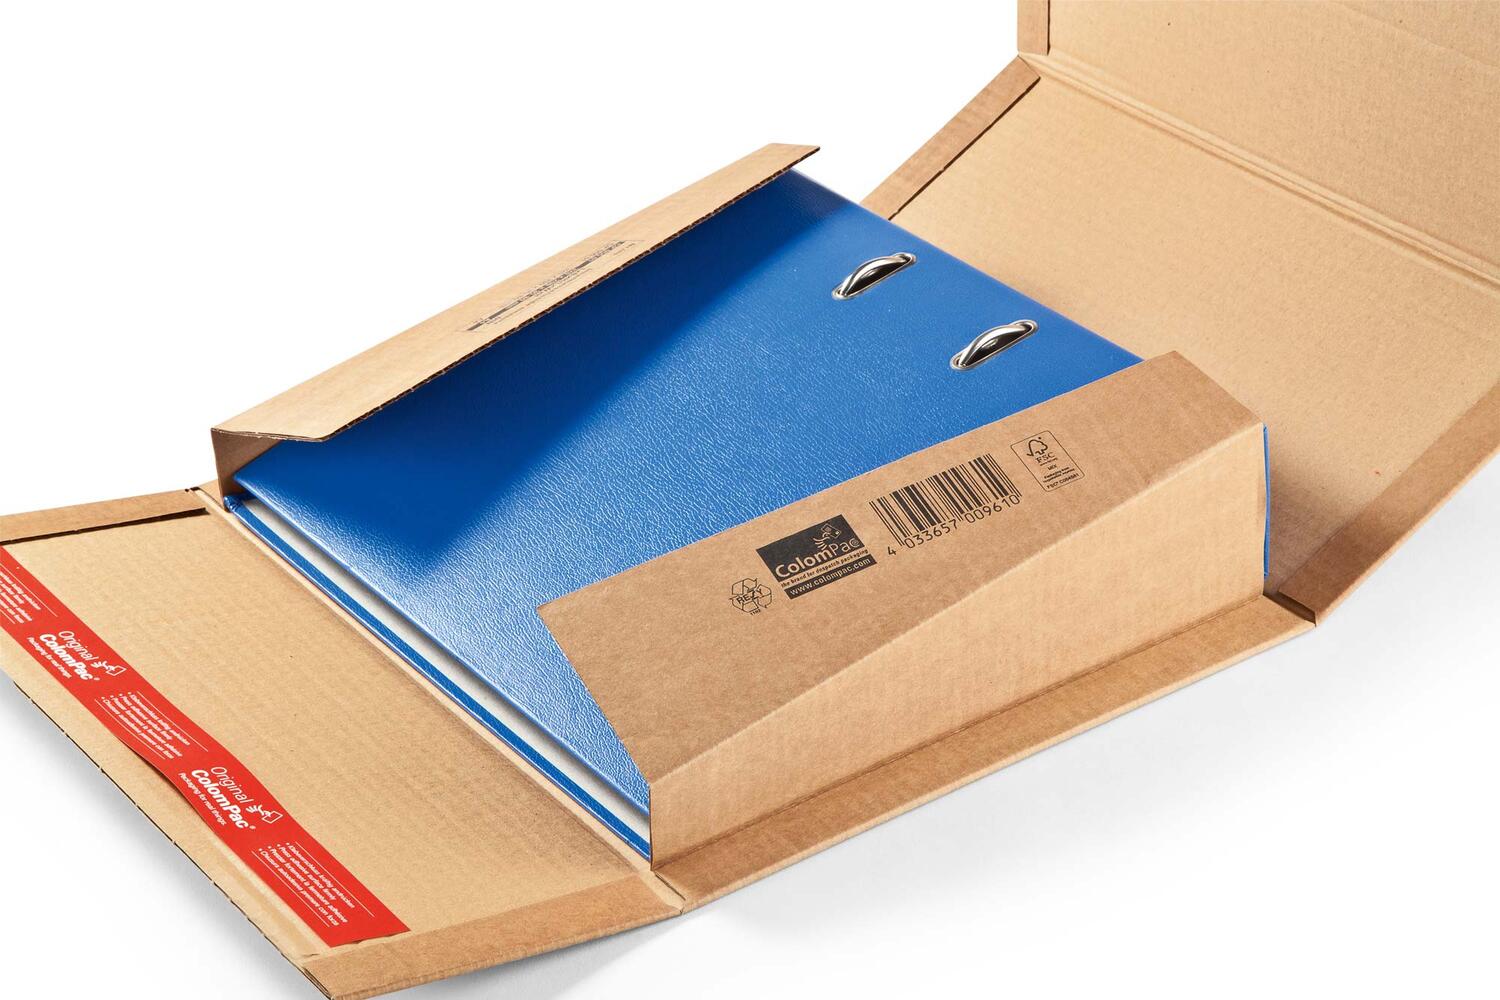 ColomPac Ordnerversandkarton flexible 370 x 295 x -85mm doppelter Selbstklebeverschluss braun